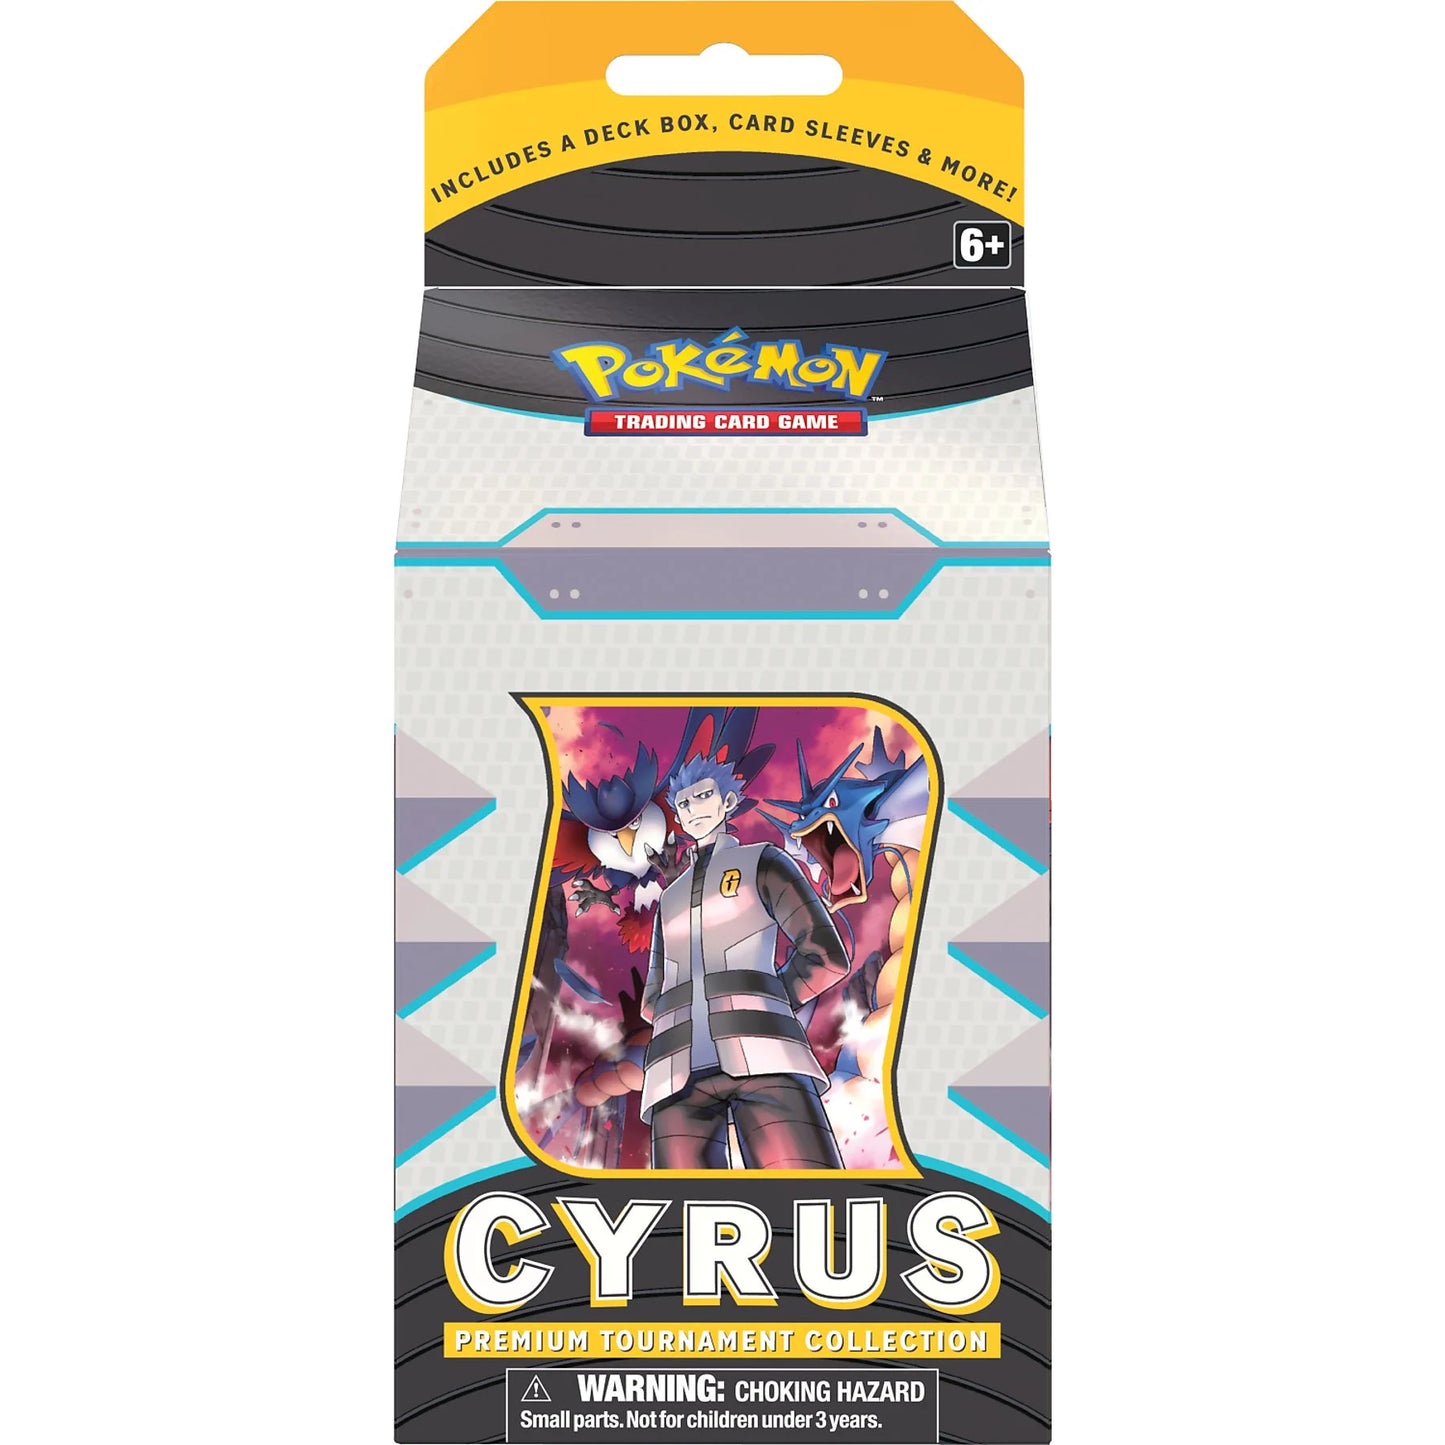 Cyrus - Premium Tournament collection